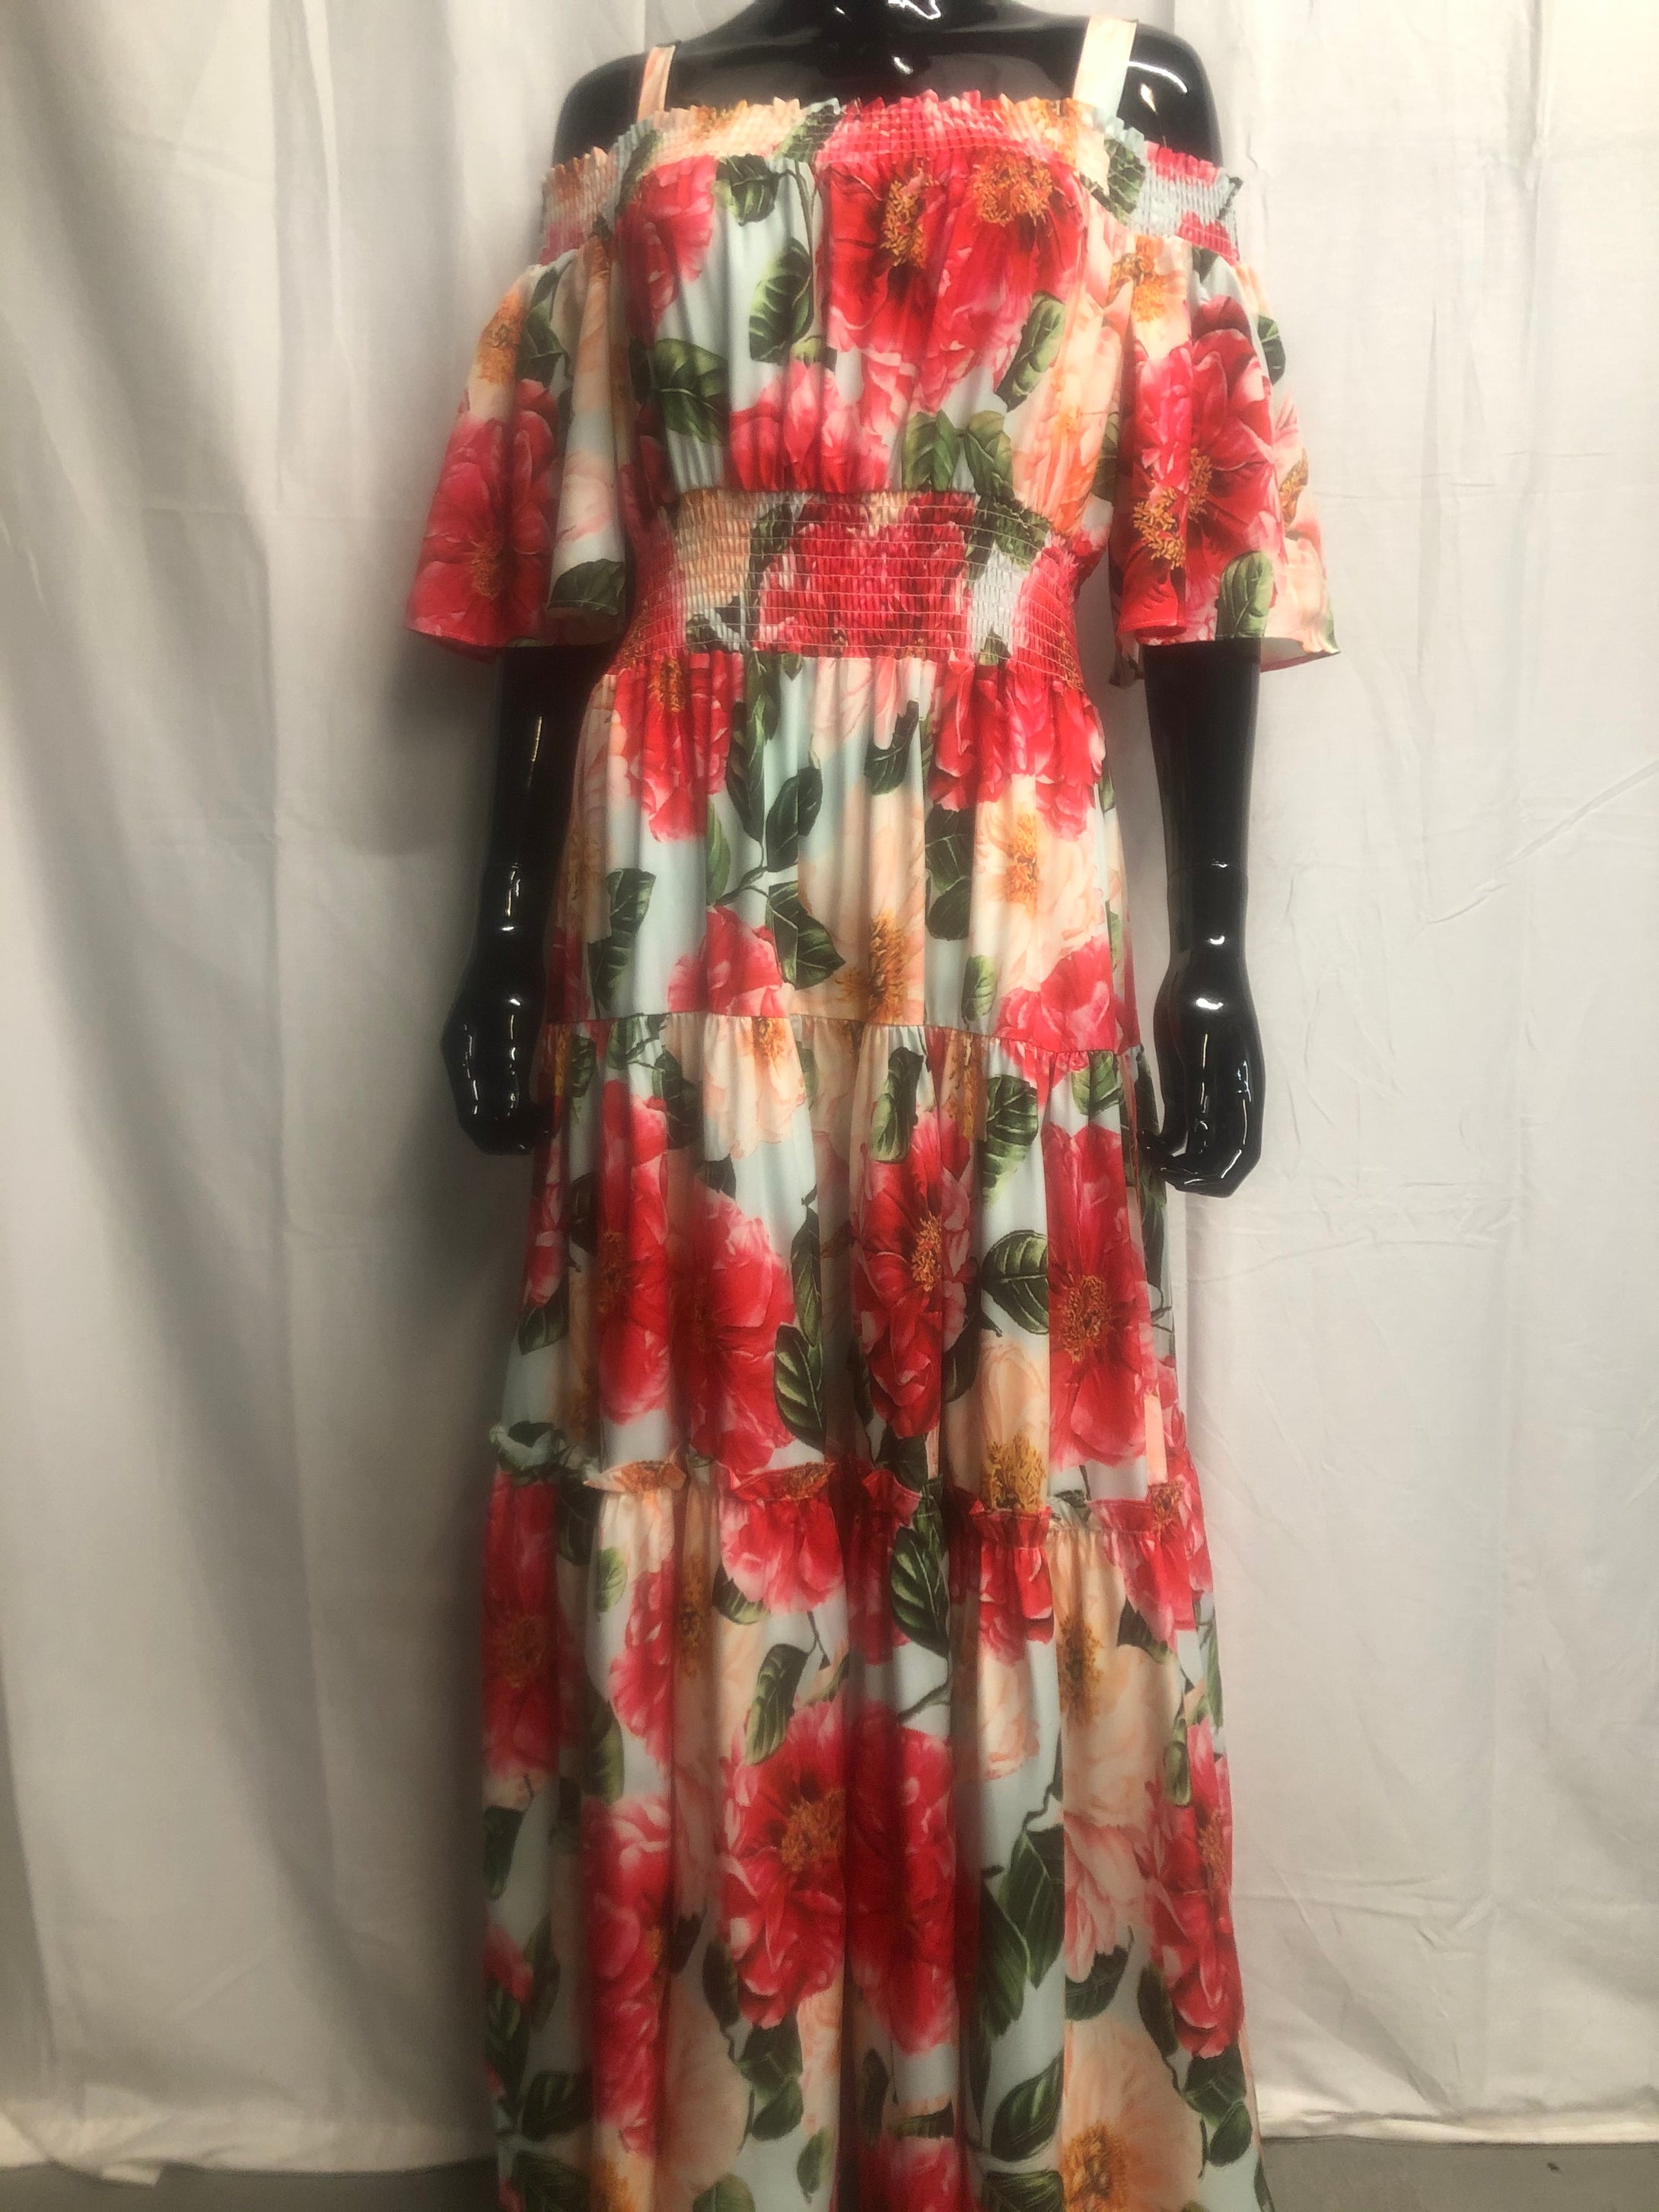 Large floral strappy/bardot dress  sample sale